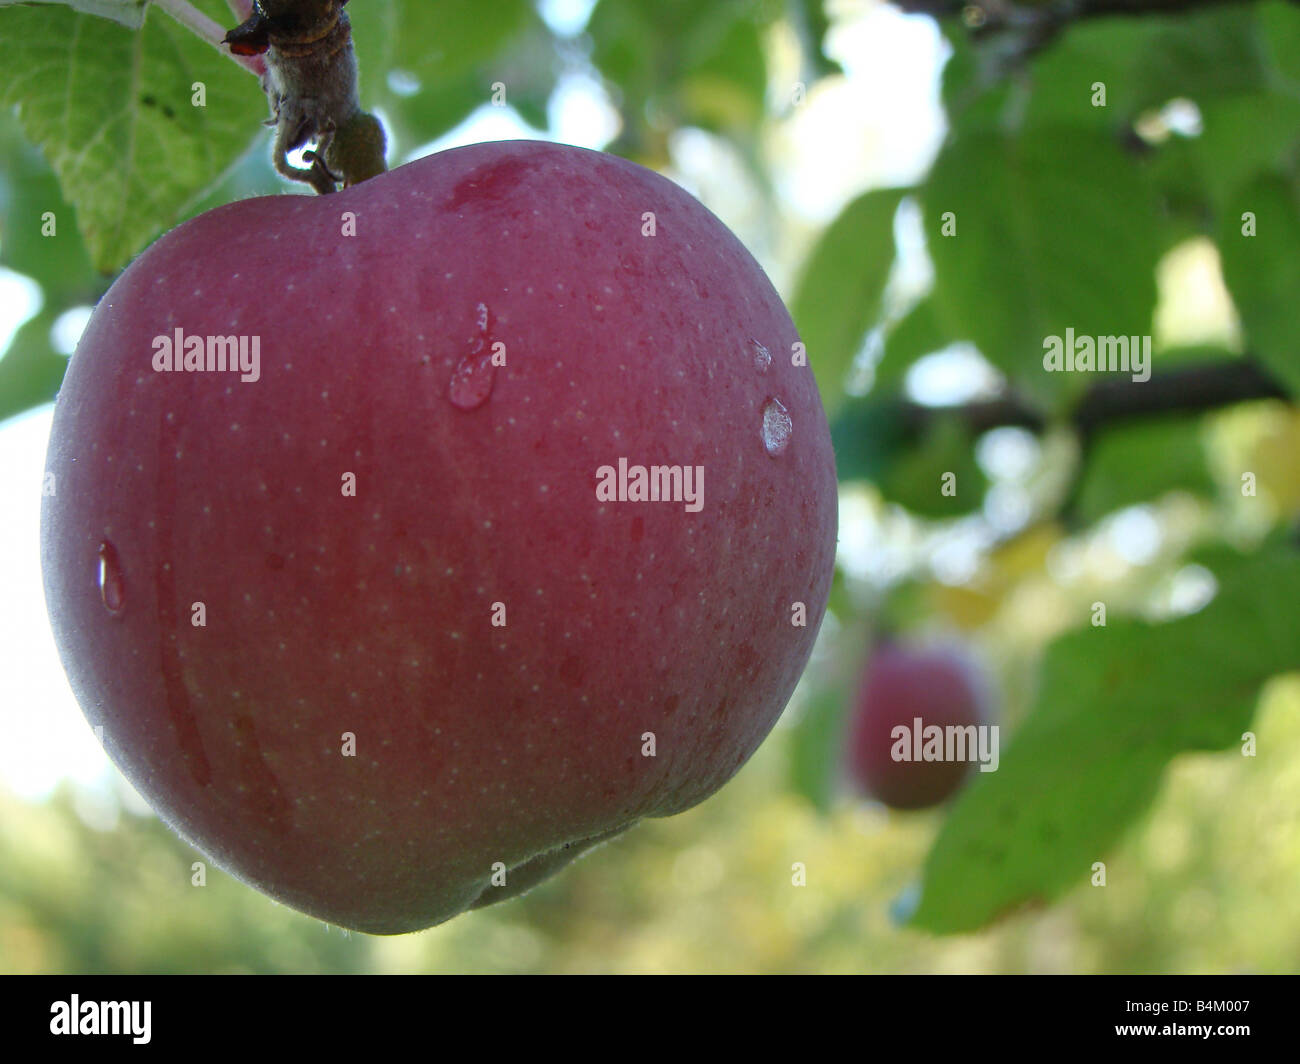 https://c8.alamy.com/comp/B4M007/ripe-red-apple-in-dwarf-mcintosh-apple-tree-in-autumn-B4M007.jpg